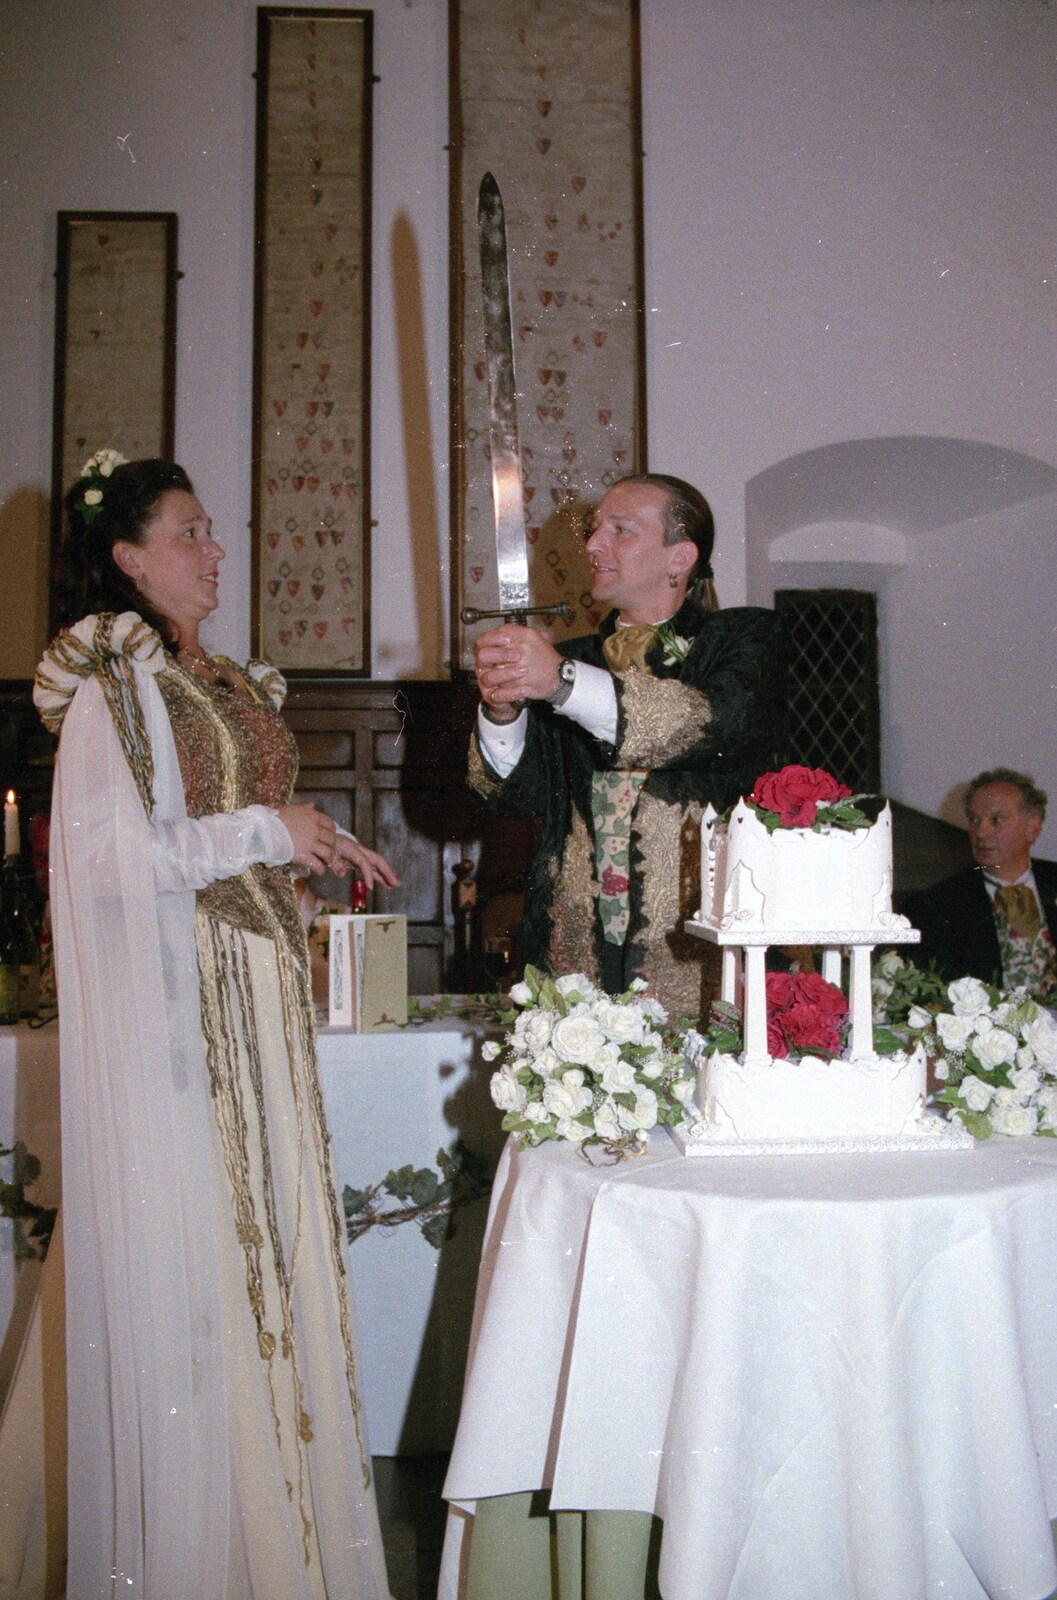 Stuart and Sarah's CISU Wedding, Naworth Castle, Brampton, Cumbria - 21st September 1996: Stuart weilds a large sword around